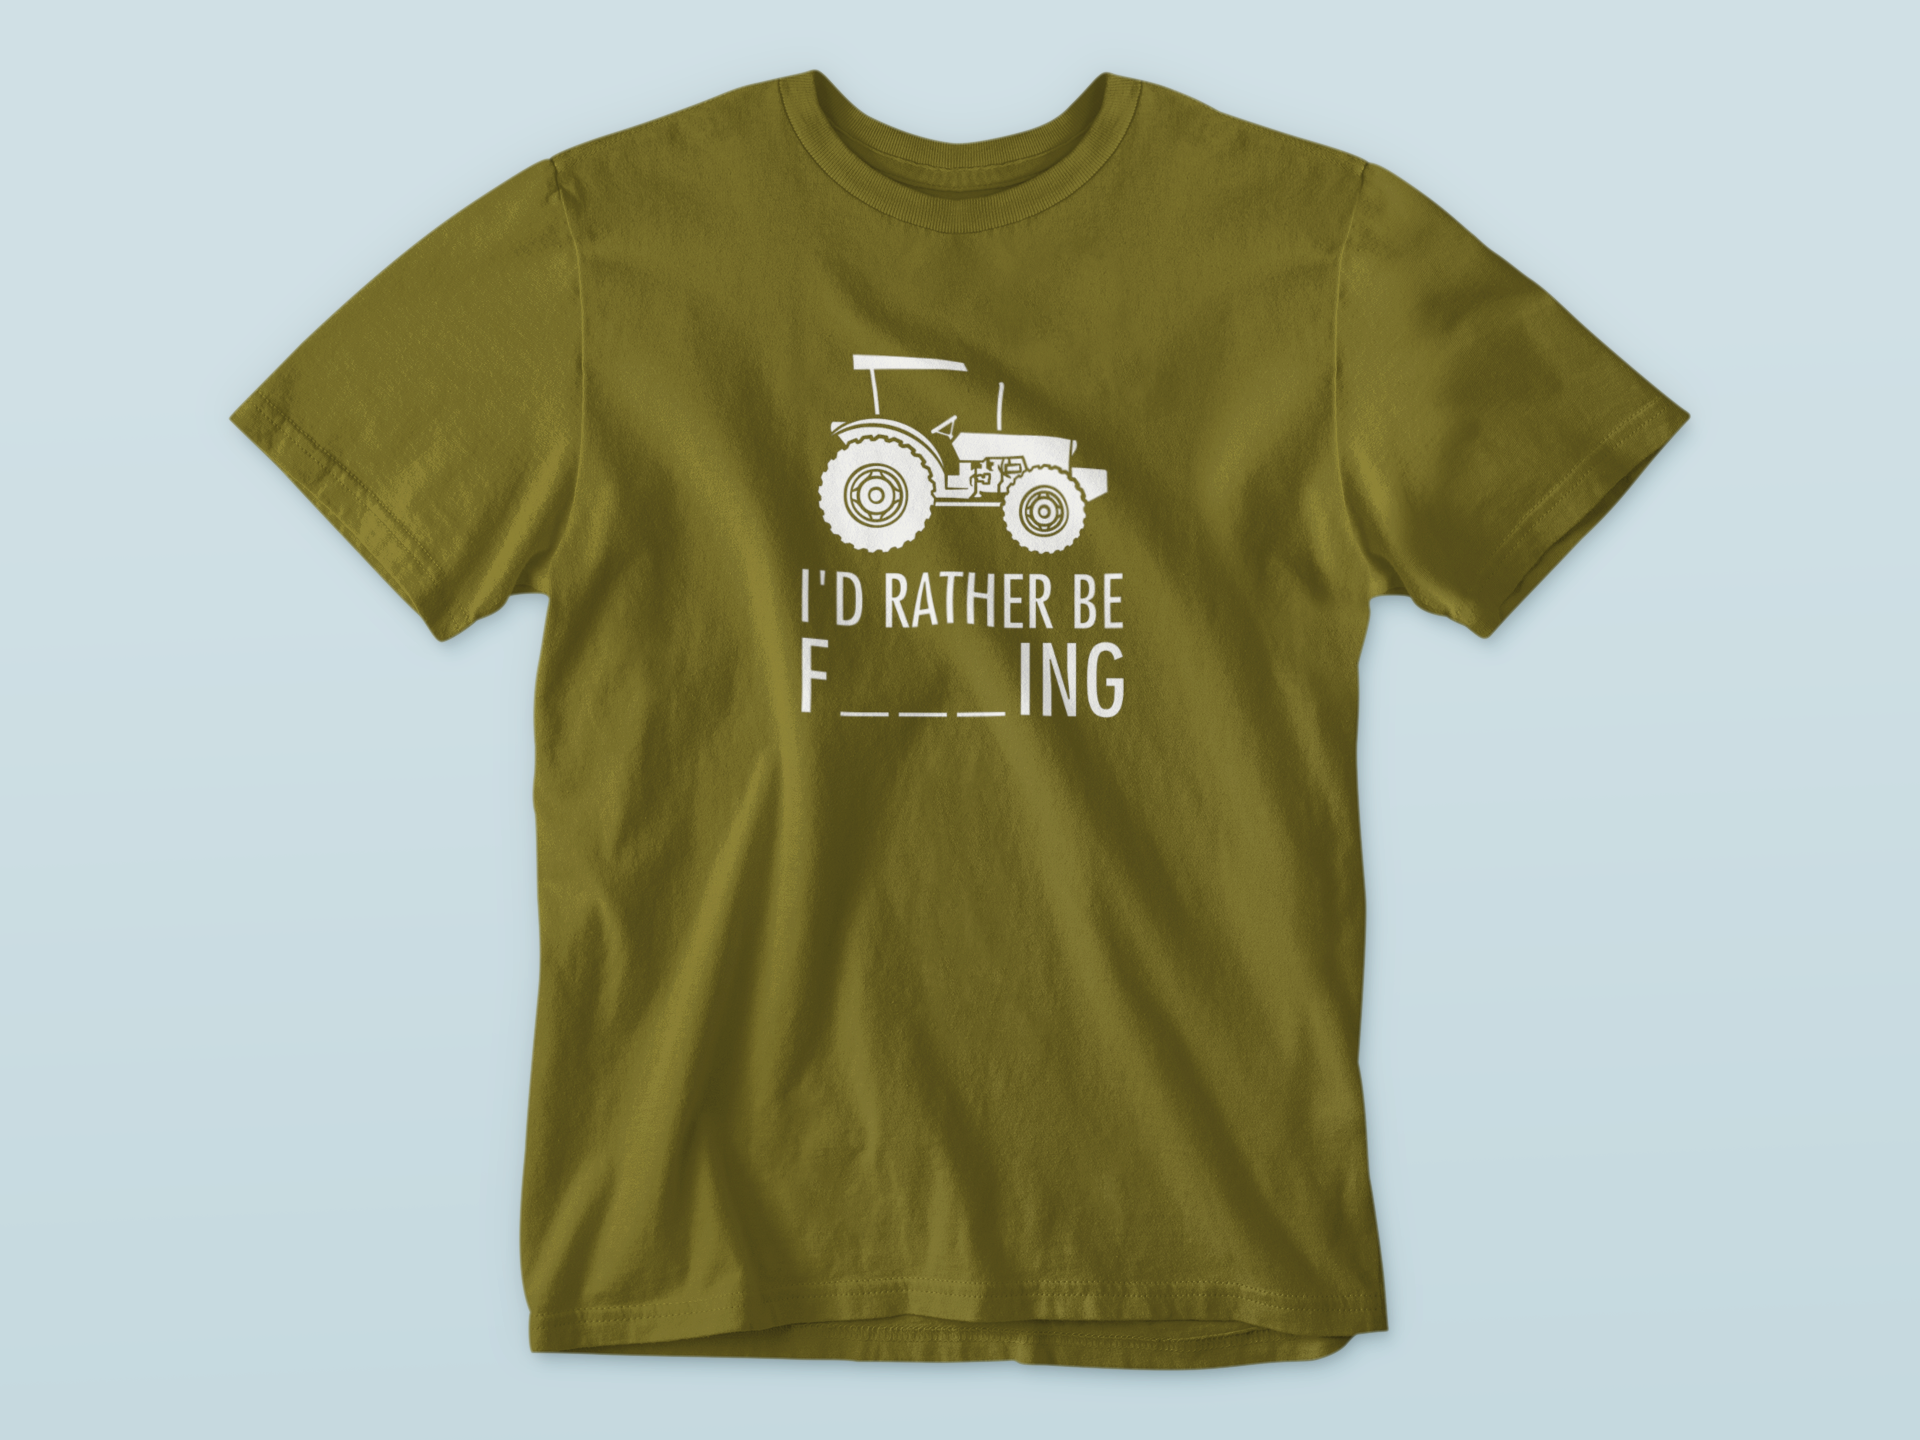 I'd rather be | Farming | T-shirt